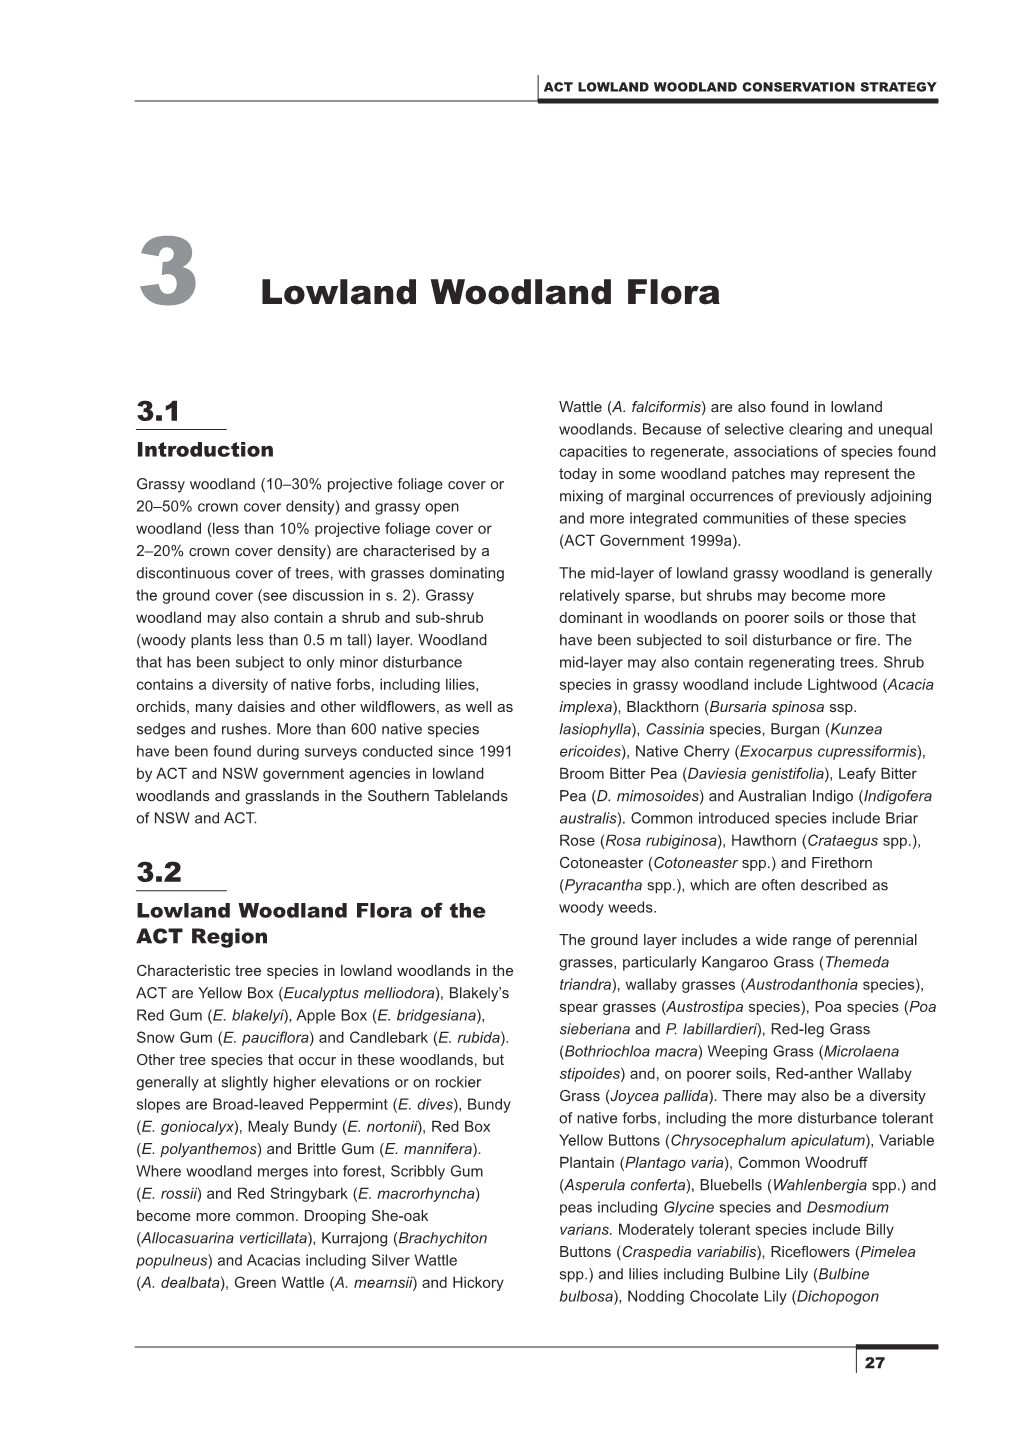 Lowland Woodland Flora